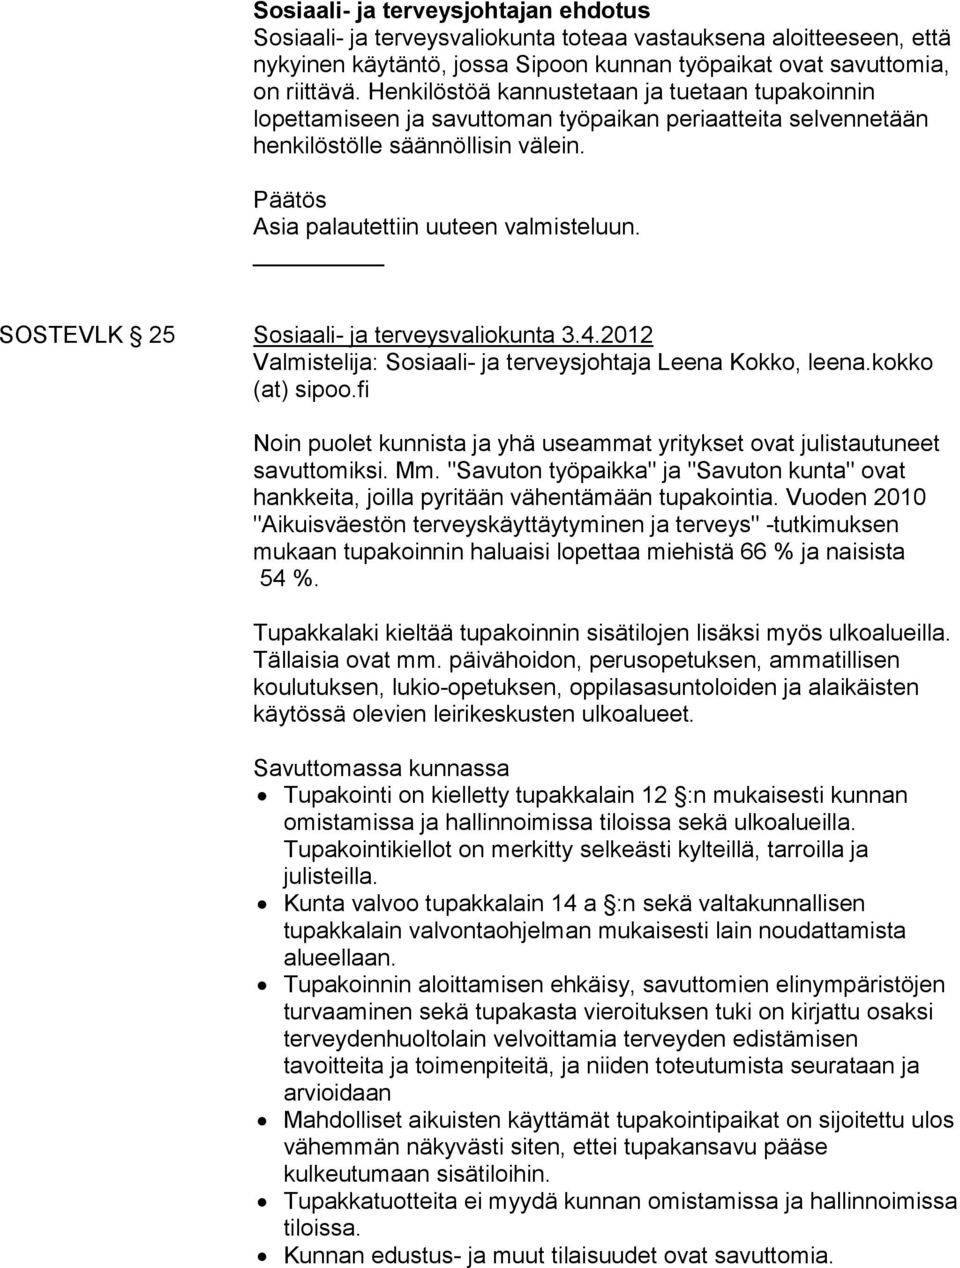 SOSTEVLK 25 Sosiaali- ja terveysvaliokunta 3.4.2012 Valmistelija: Sosiaali- ja terveysjohtaja Leena Kokko, leena.kokko (at) sipoo.